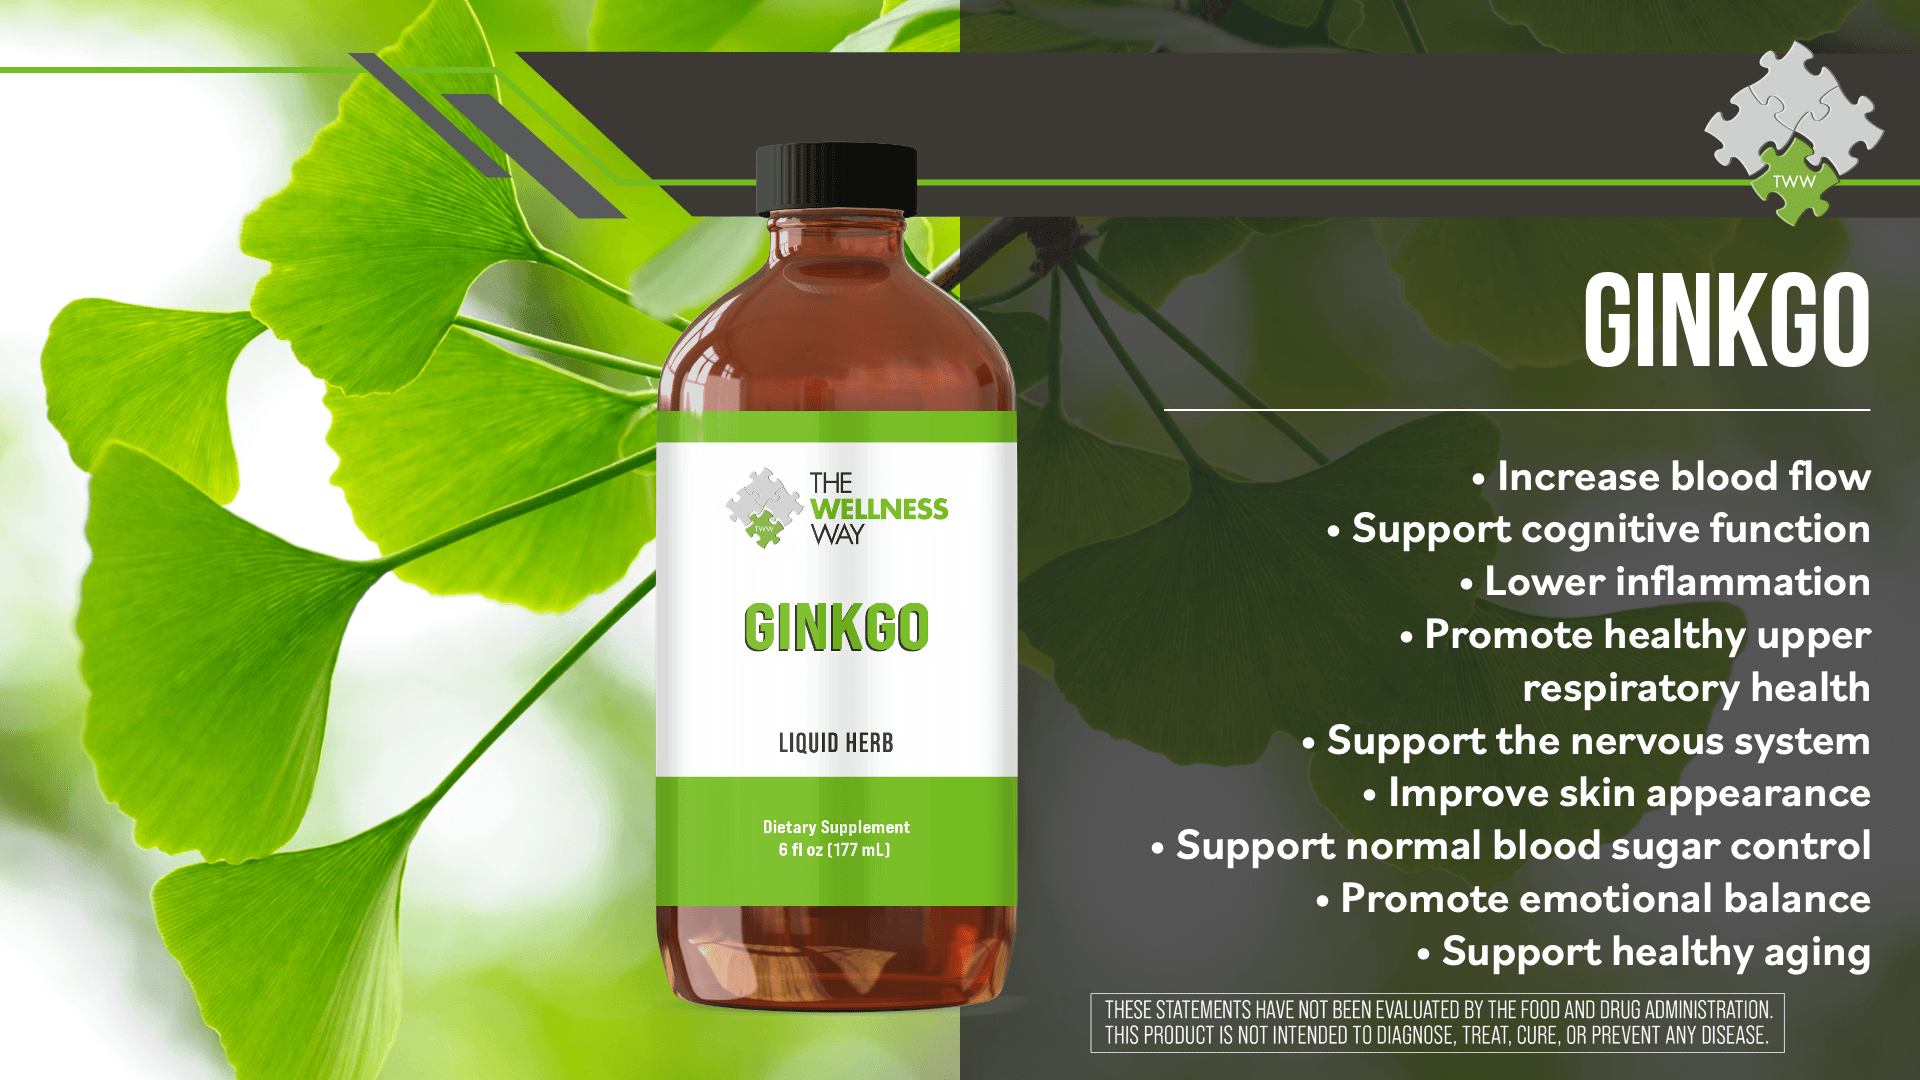 Ginkgo Leaf benefits